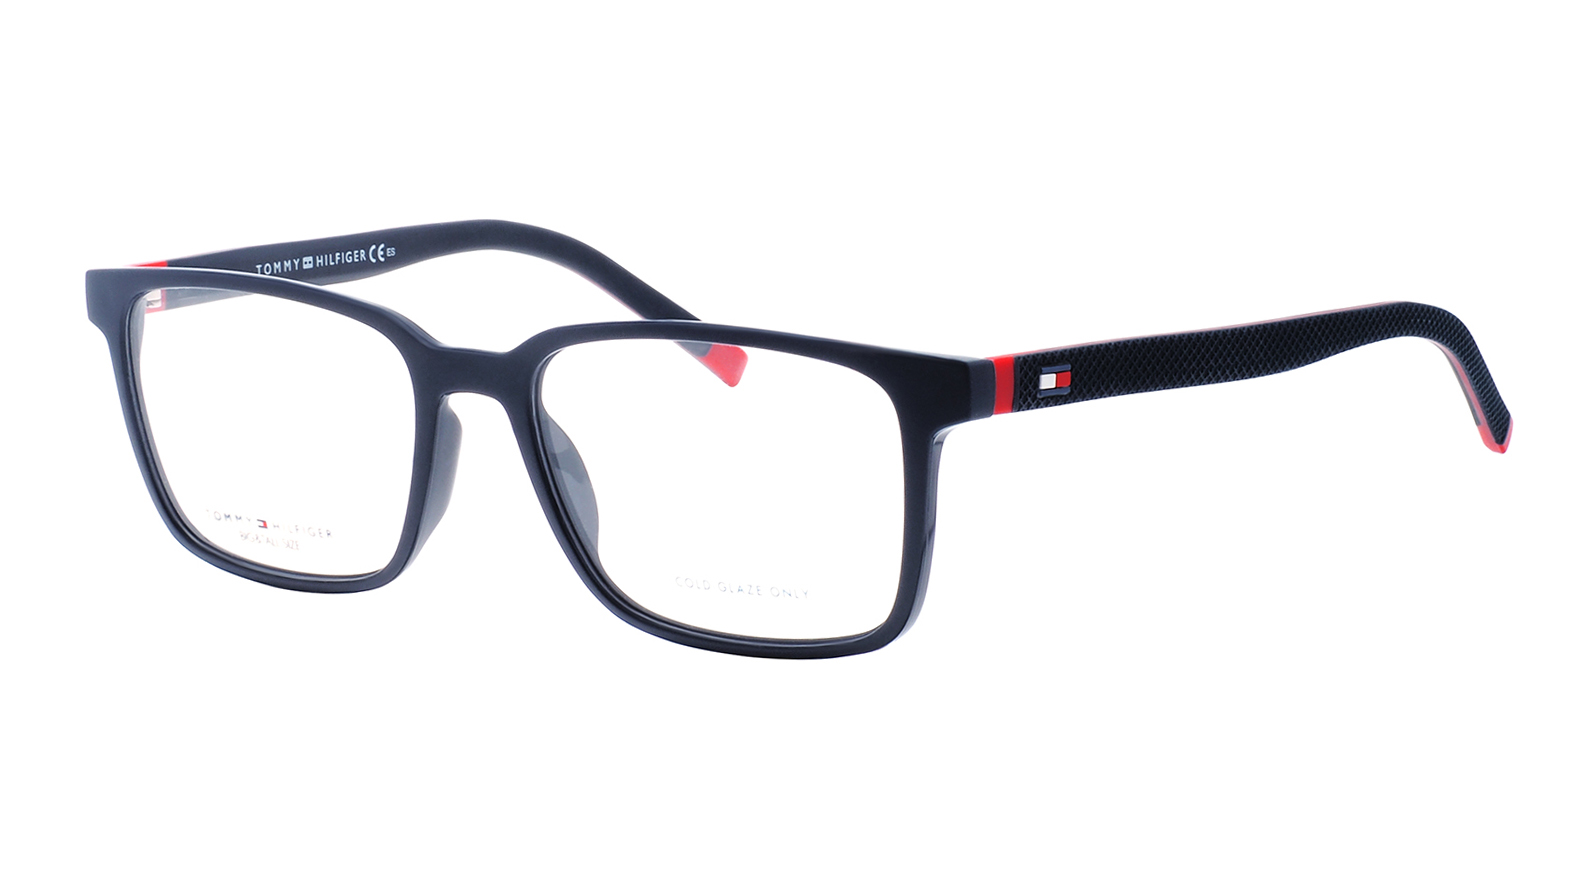 Tommy Hilfiger 1786 FLL очки корригирующие 3гр линза фхс мужские